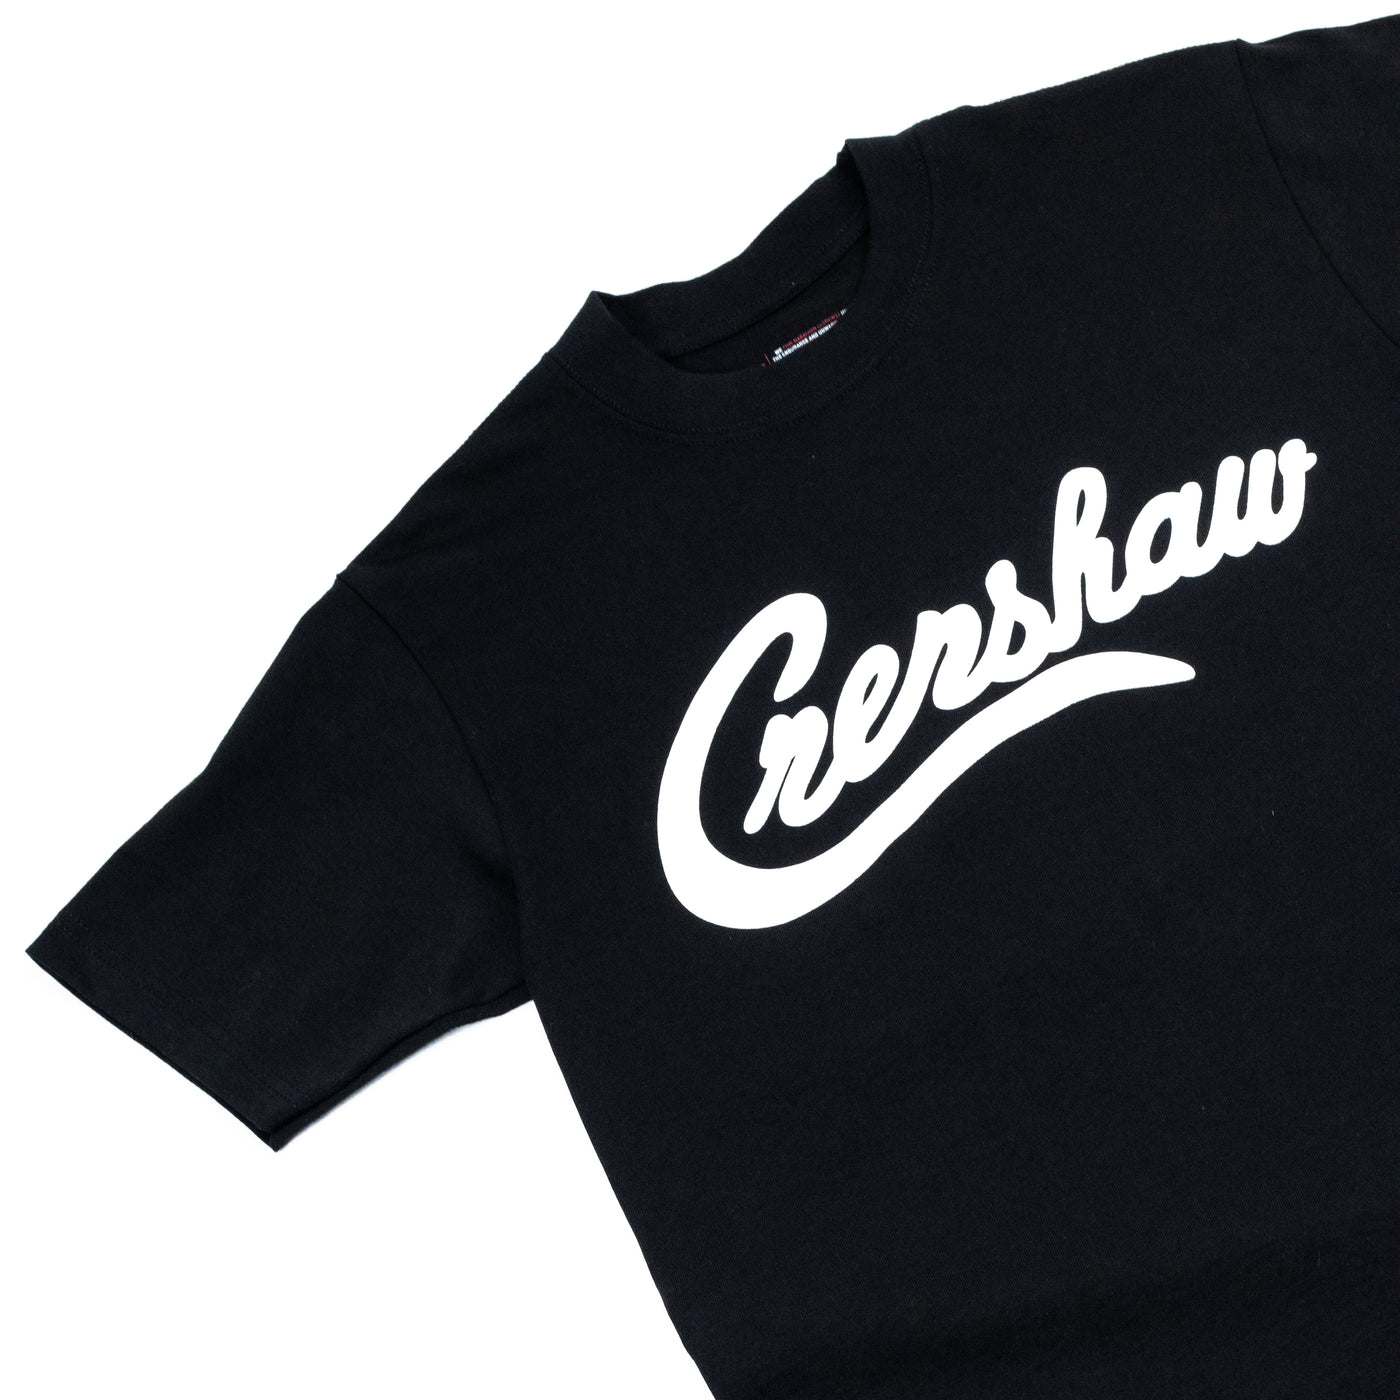 Crenshaw T-Shirt - Black/White - Detail